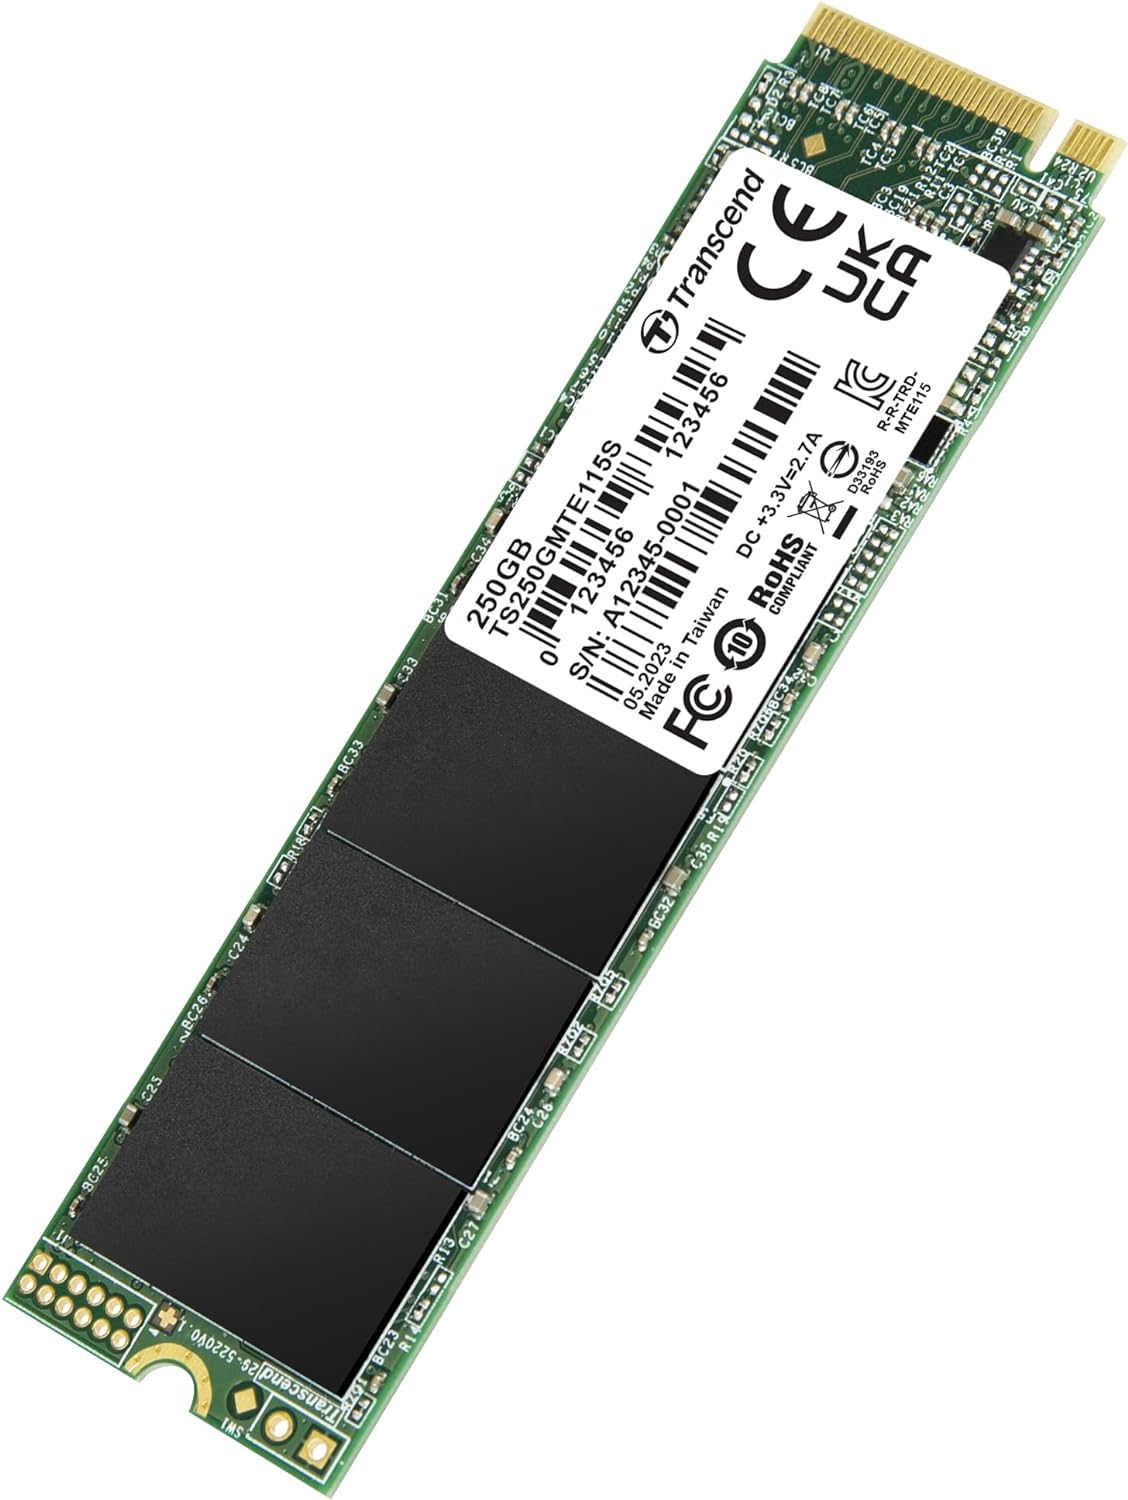 TRANSCEND 250GB MTE115S PCI-E GEN 3x4 M.2 2280 SSD 3D TLC - 3200 MB/s Read 1300 MB/s Write - 100 TBW